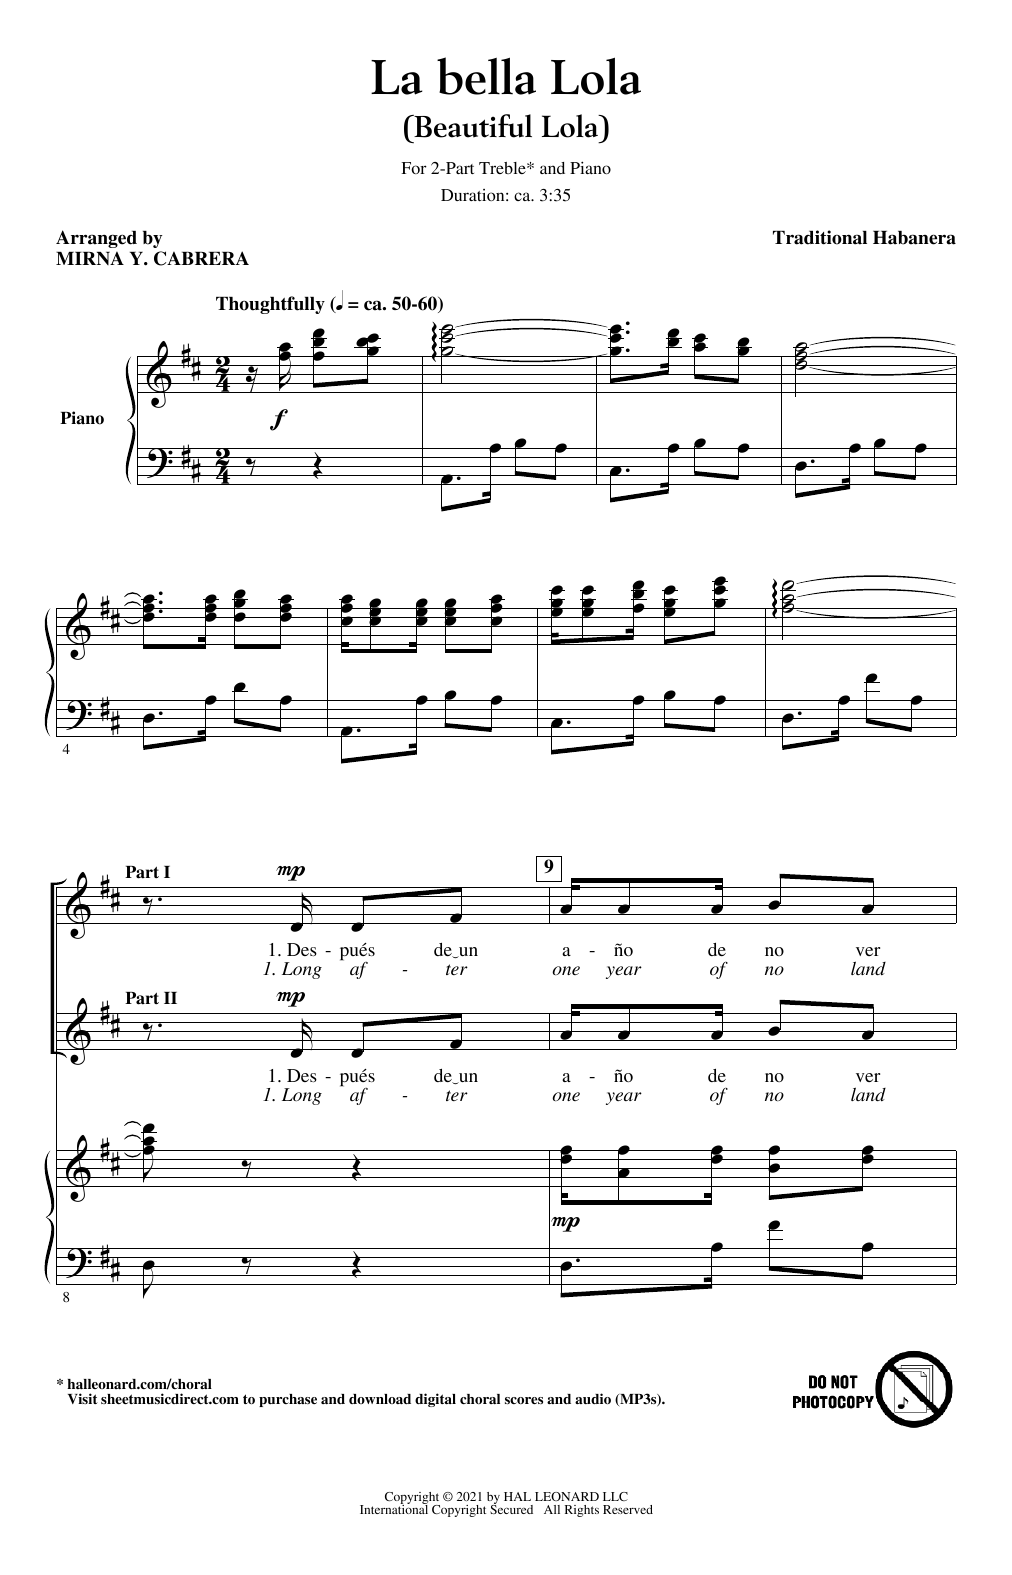 Traditional Habanera La Bella Lola (Beautiful Lola) (arr. Mirna Y. Cabrera) Sheet Music Notes & Chords for 2-Part Choir - Download or Print PDF